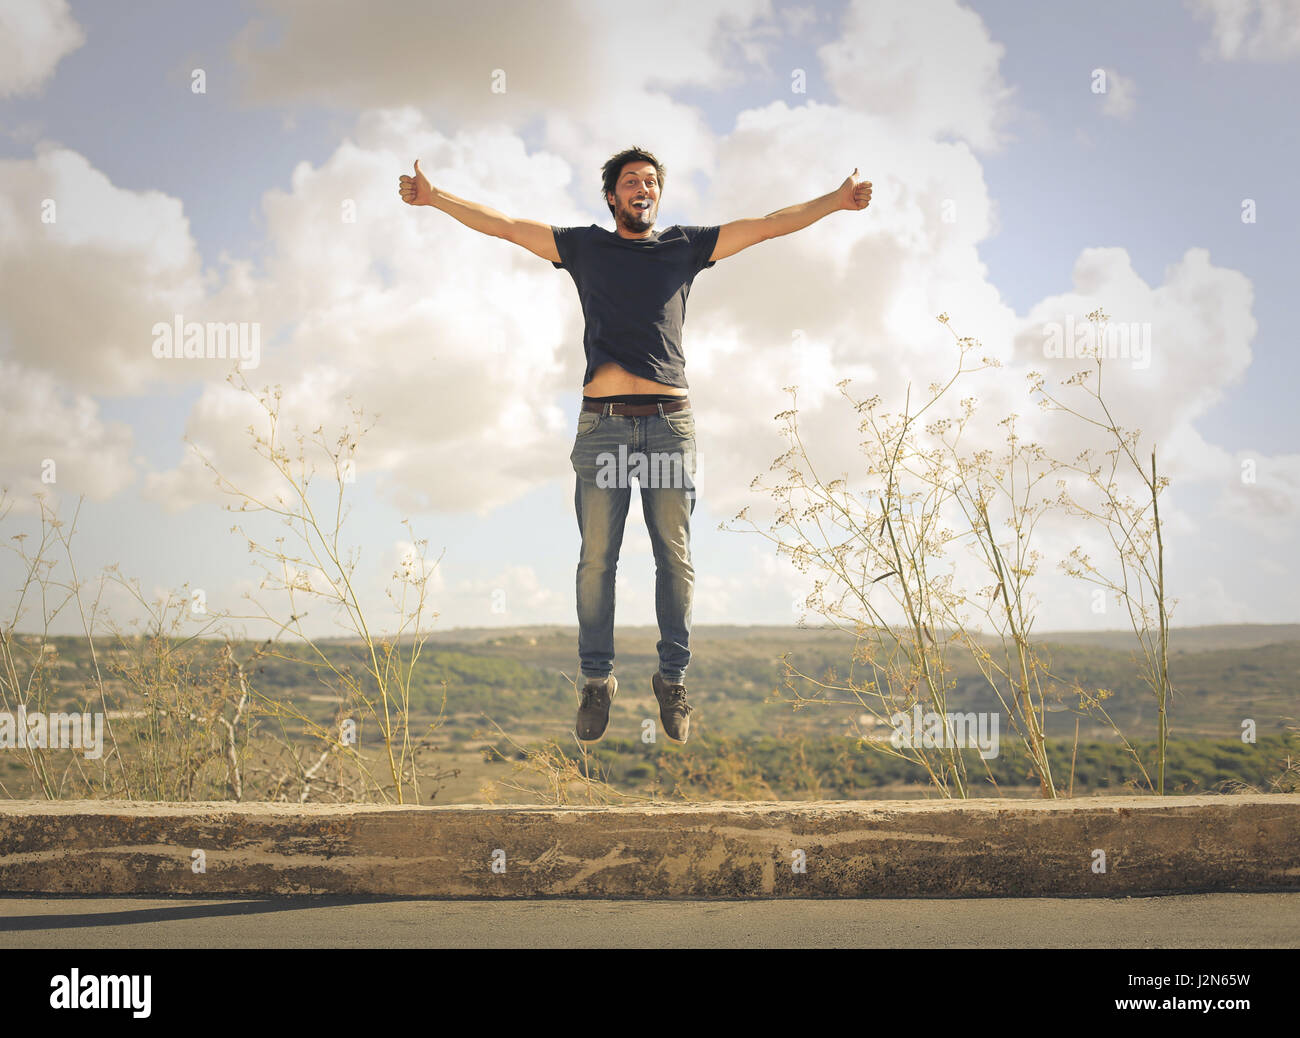 Man jumping on field Stock Photo